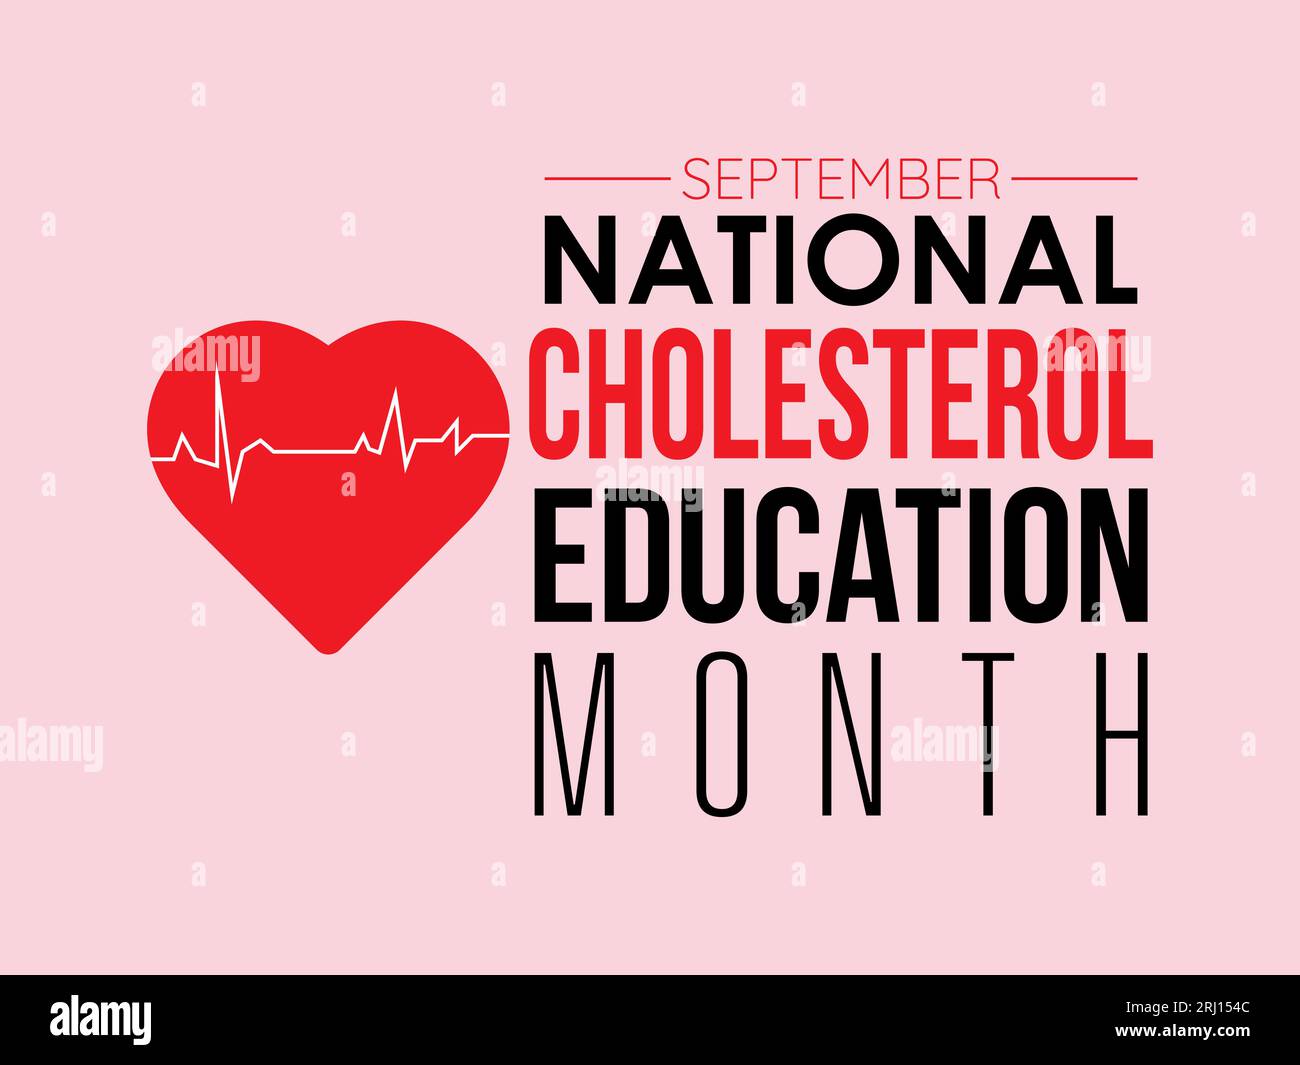 National Cholesterol Education Month Advocates for Knowledge, Prevention, and Wellness Strategies. Banner illustrativo del vettore Heart Health Awareness t Illustrazione Vettoriale